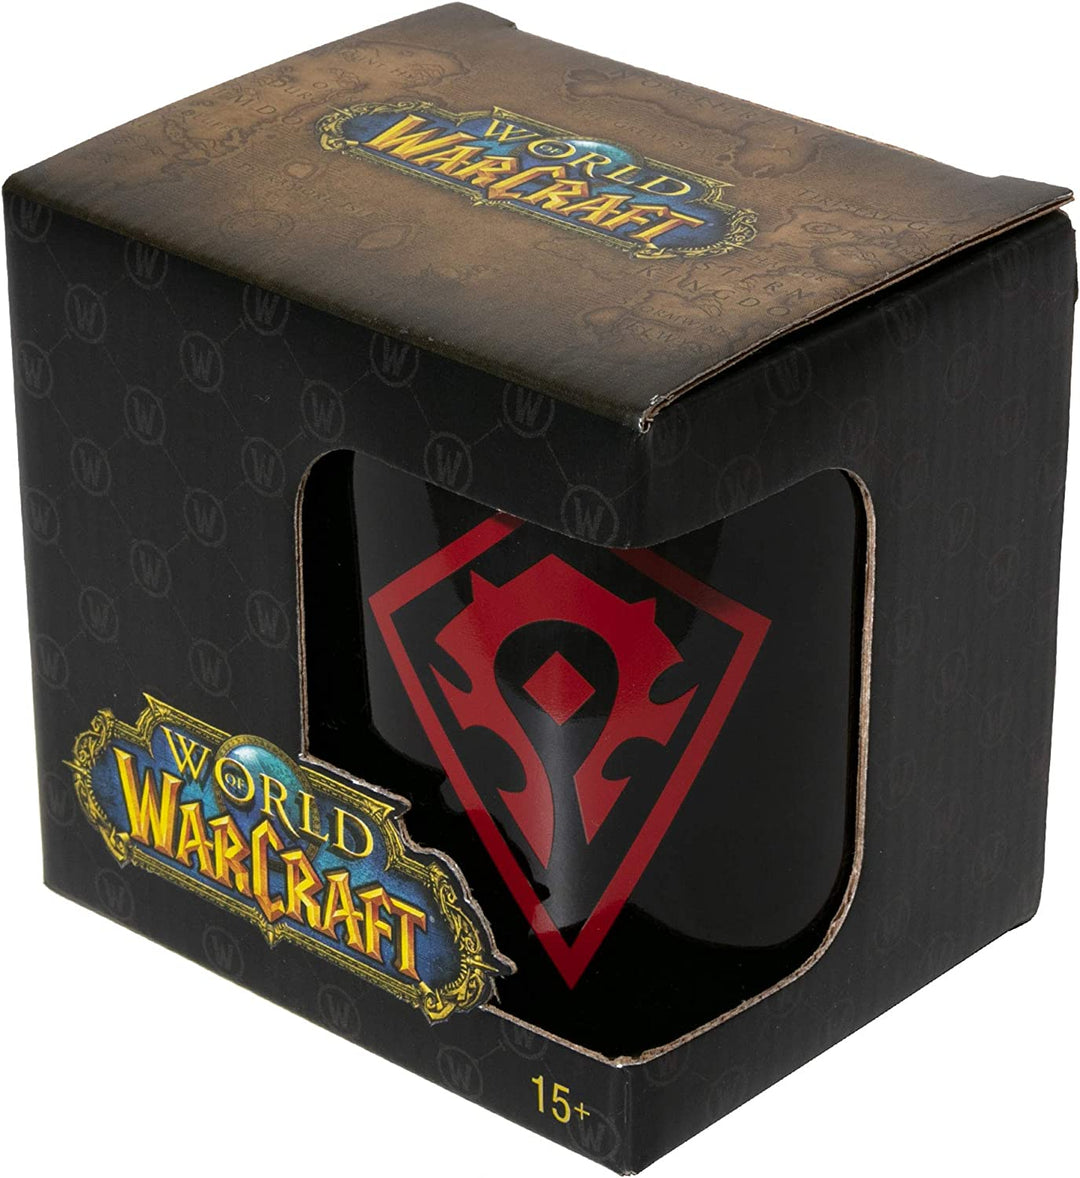 World of Warcraft For The Horde Ceramic Coffee Mug, 11 ounces